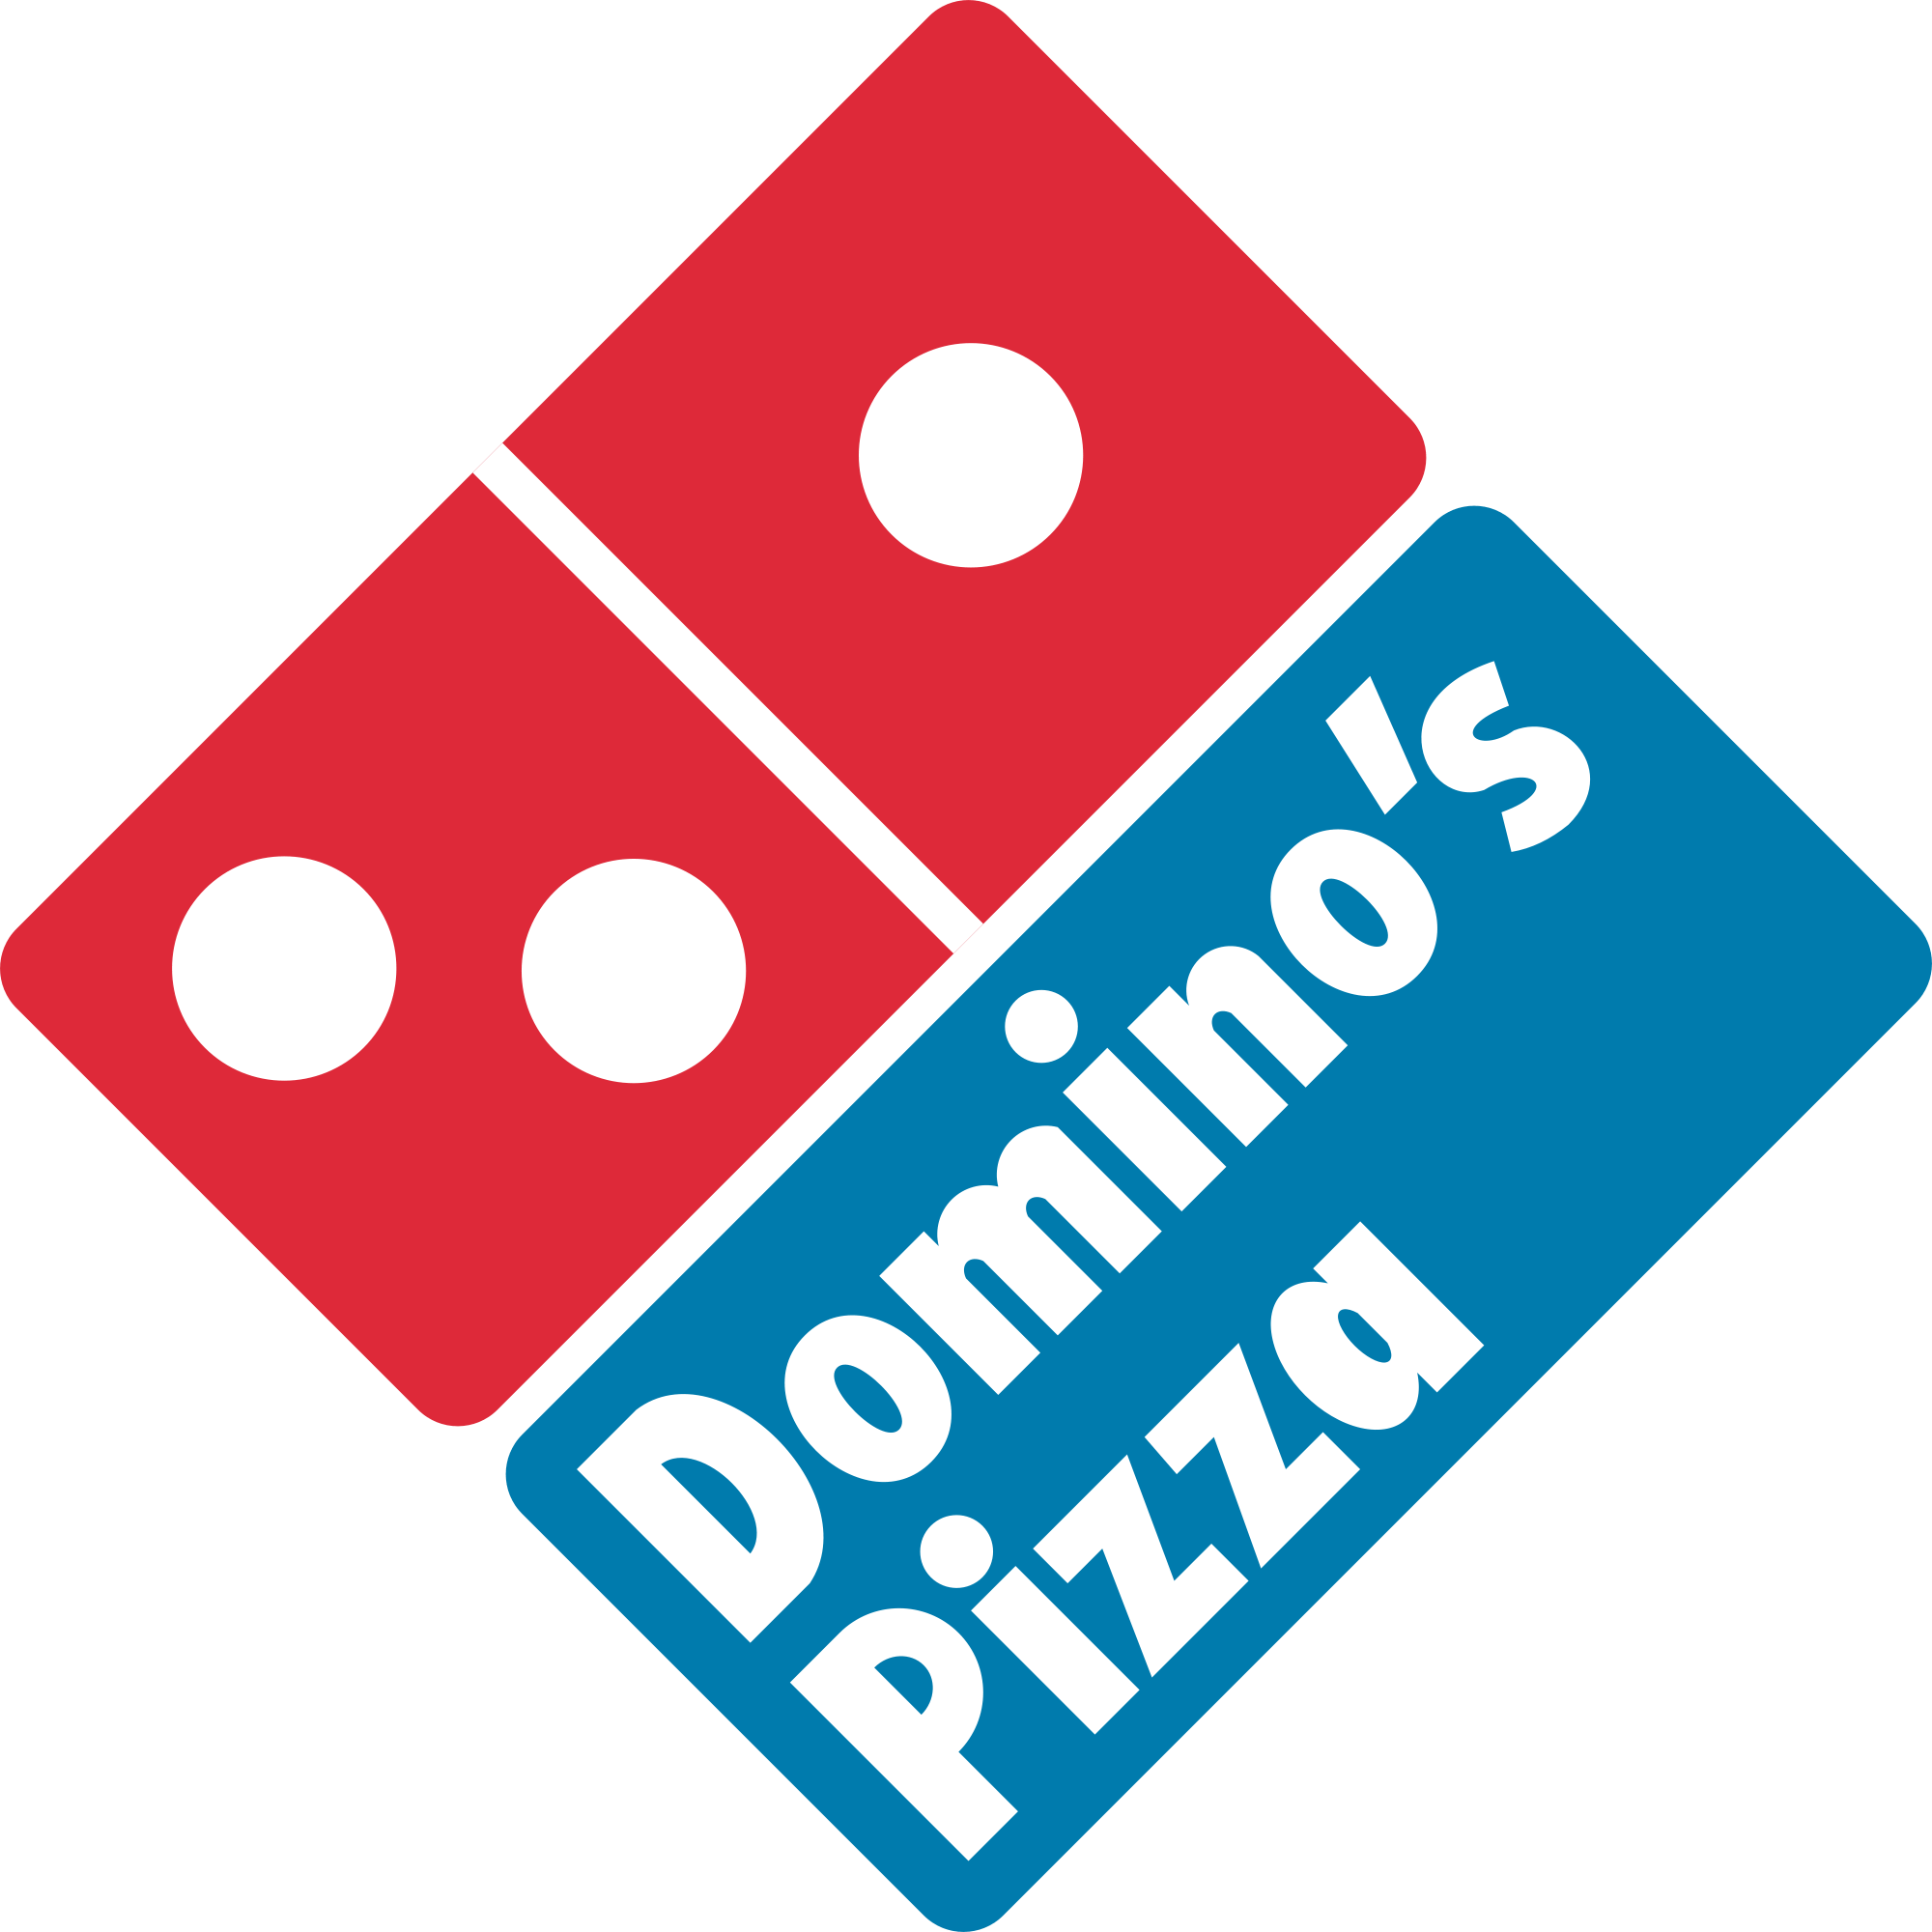 Domino's Logo - File:Dominos pizza logo.svg - Wikimedia Commons